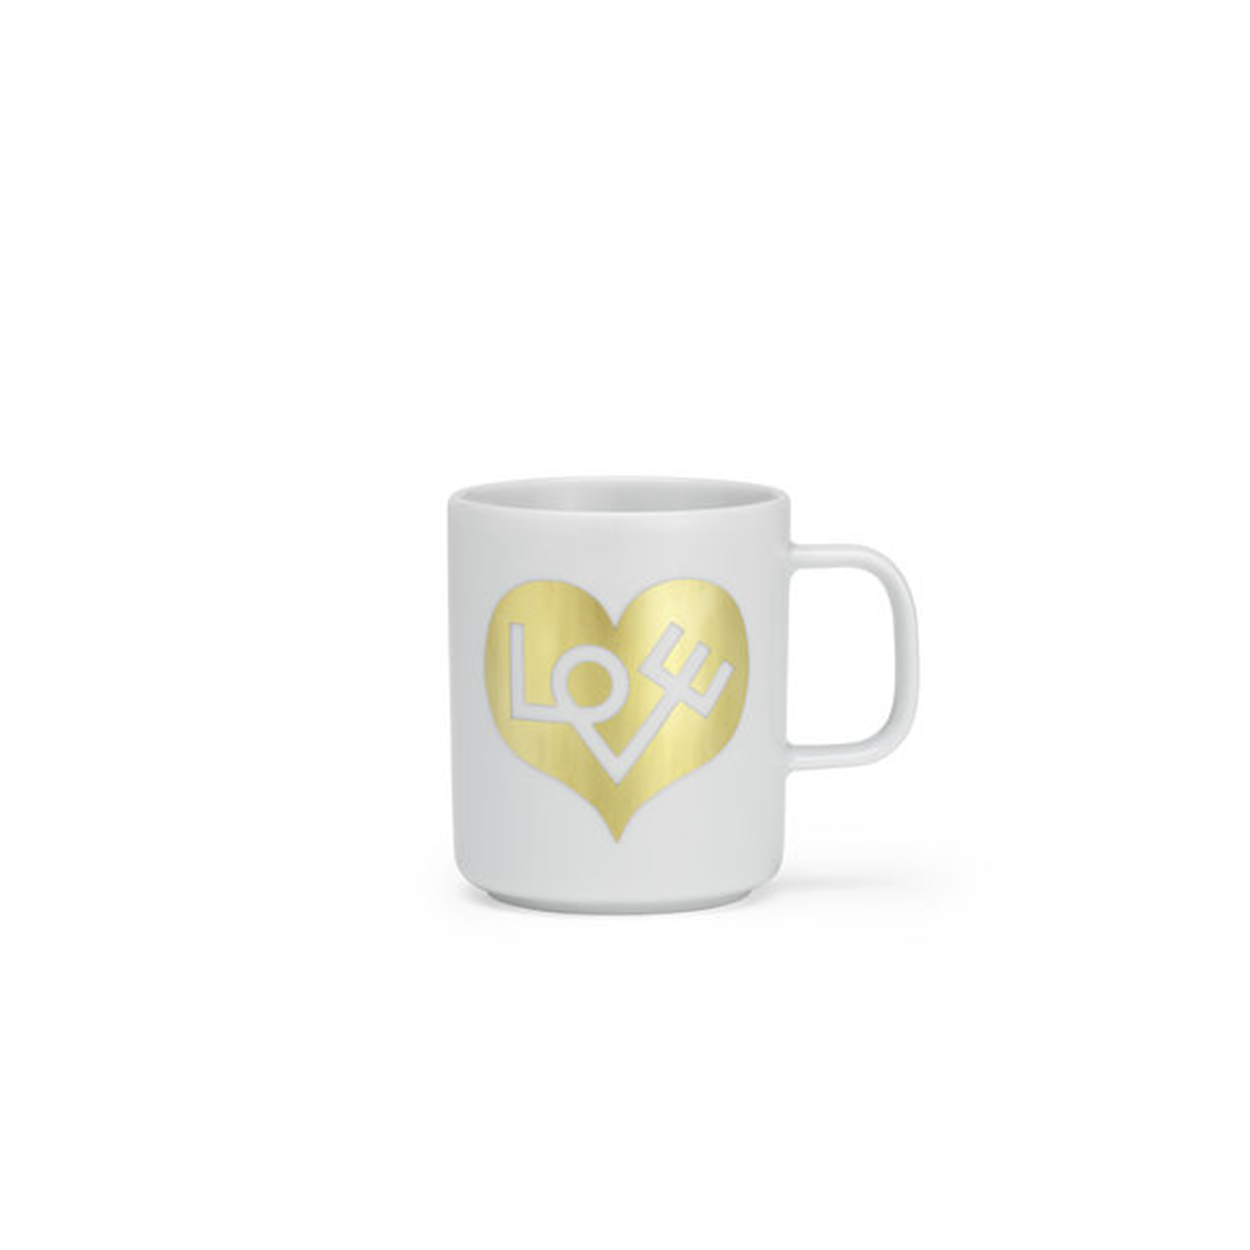 Vitra Coffee Mugs New Gold heart New Handle